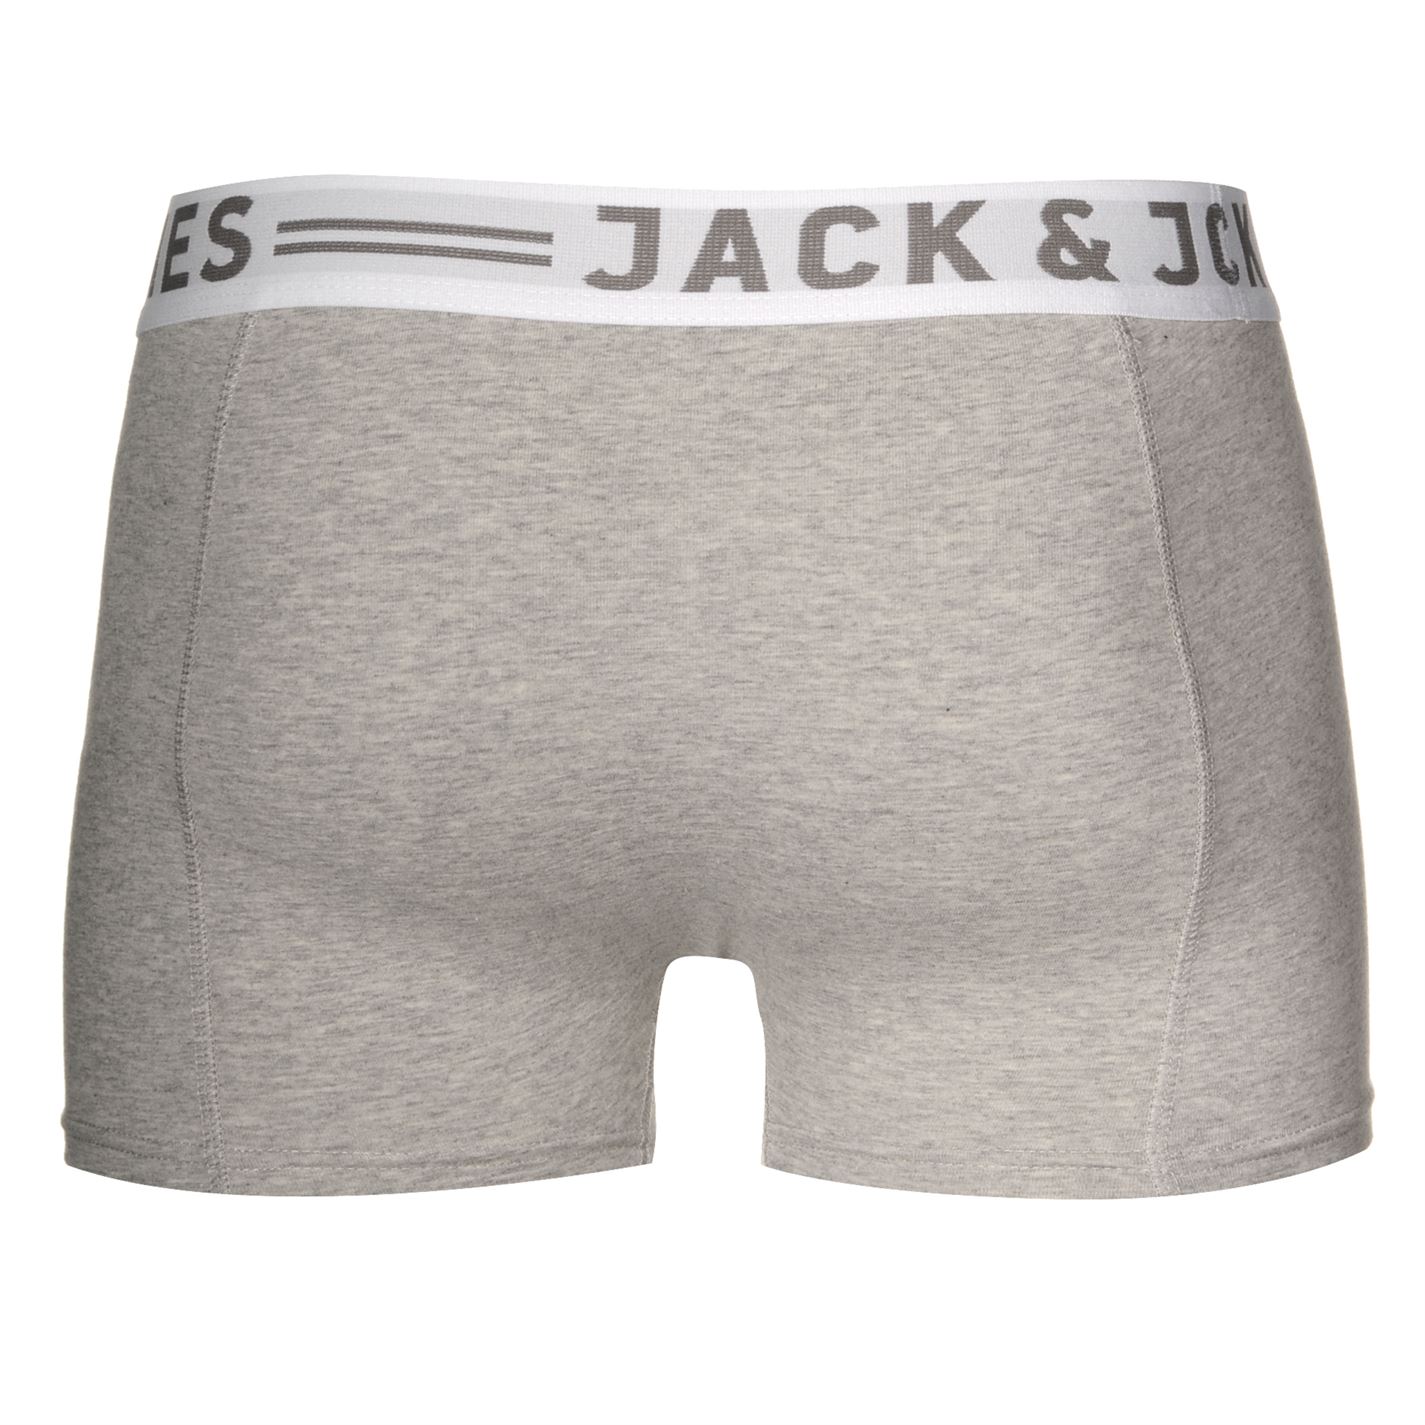 3x Jack and Jones Mens Sense Trunks Set Underwear Boxers Briefs | eBay